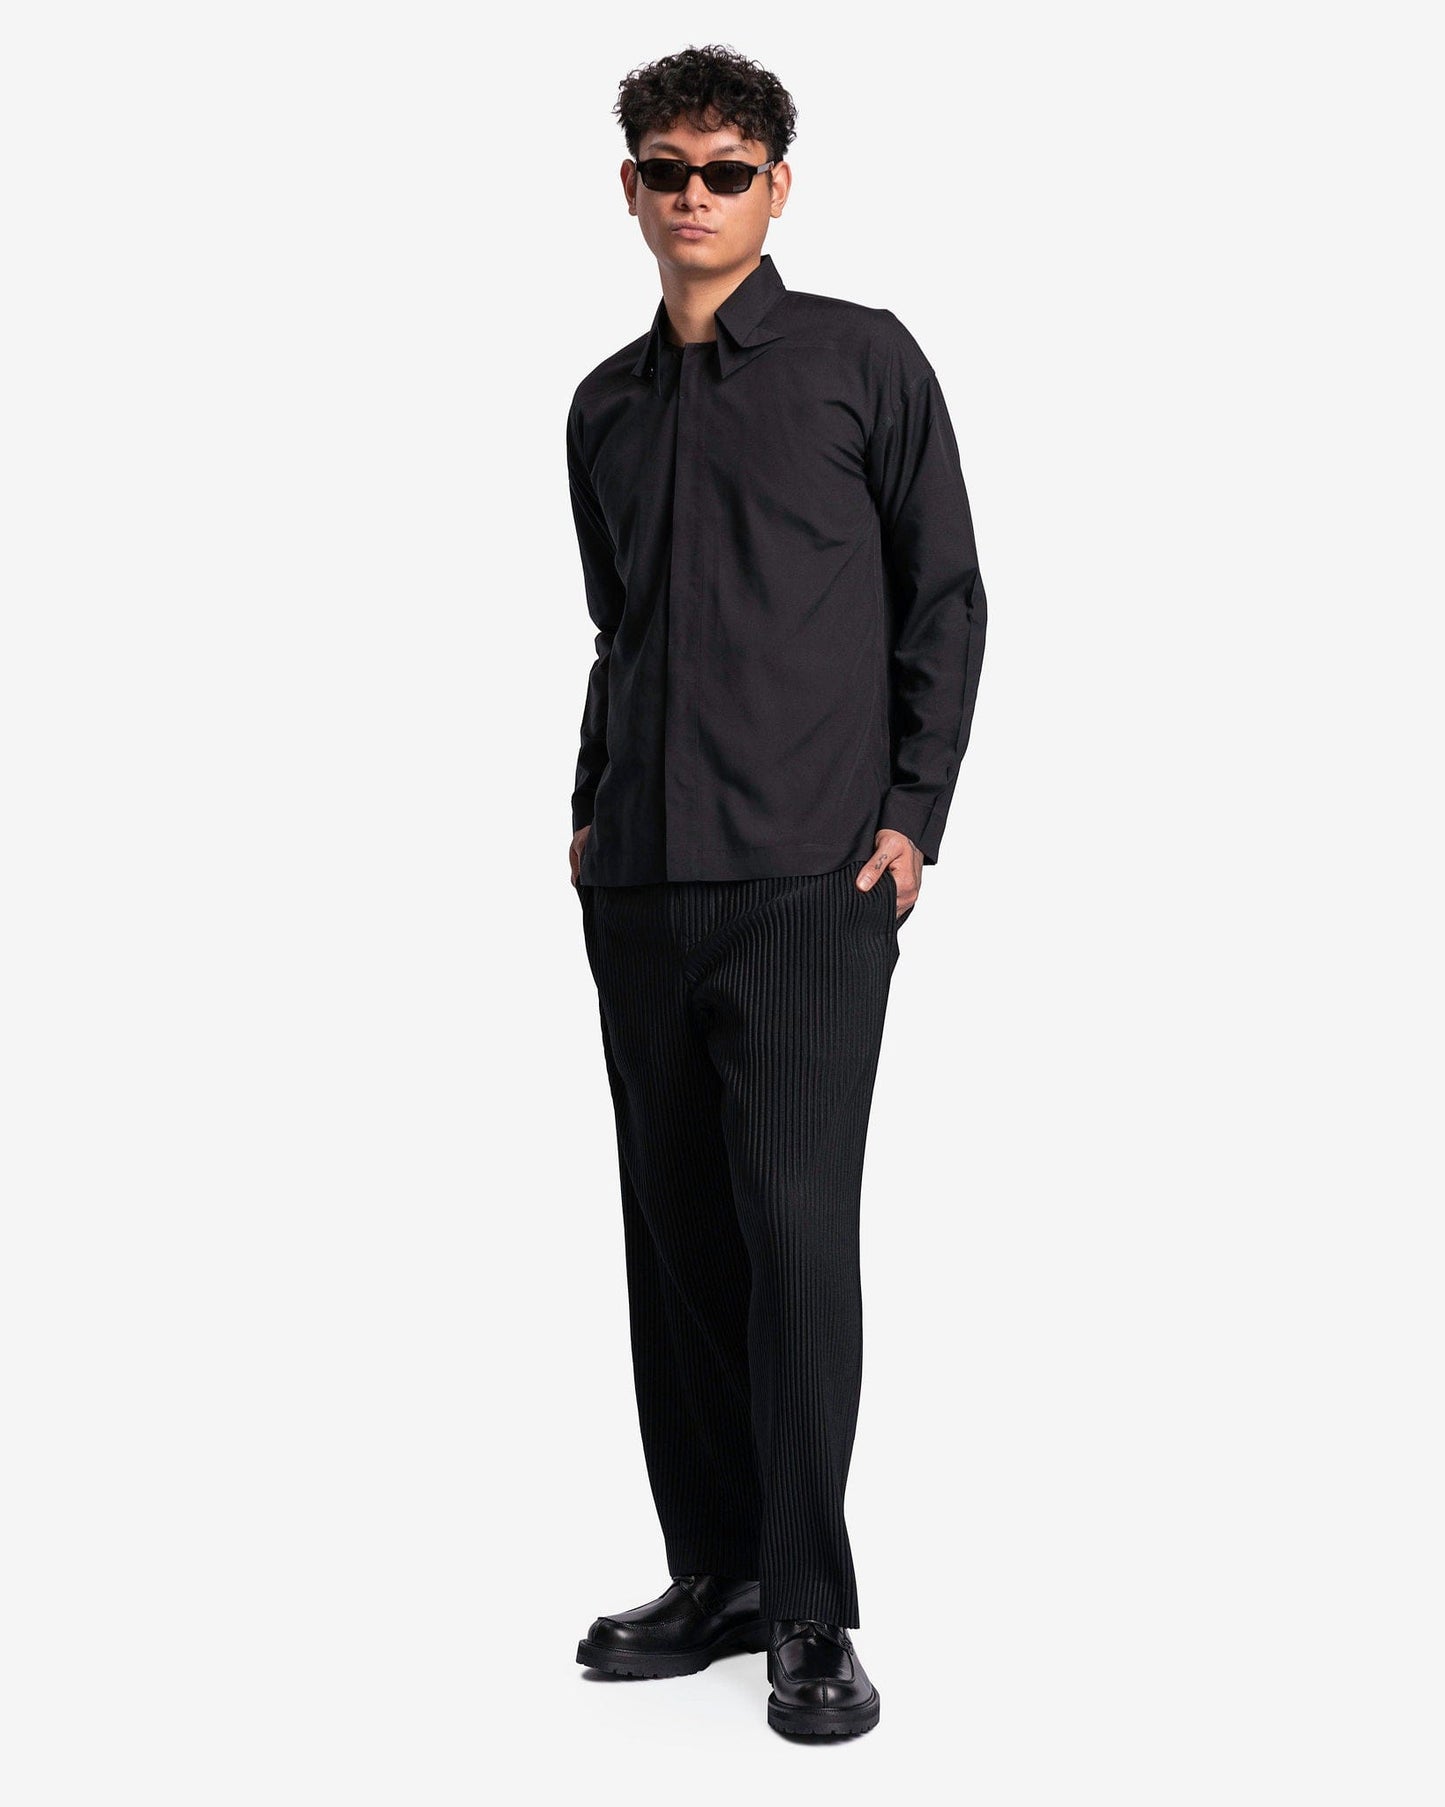 Homme Plissé Issey Miyake Men's Shirts Bow-Tie Press Shirt in Black